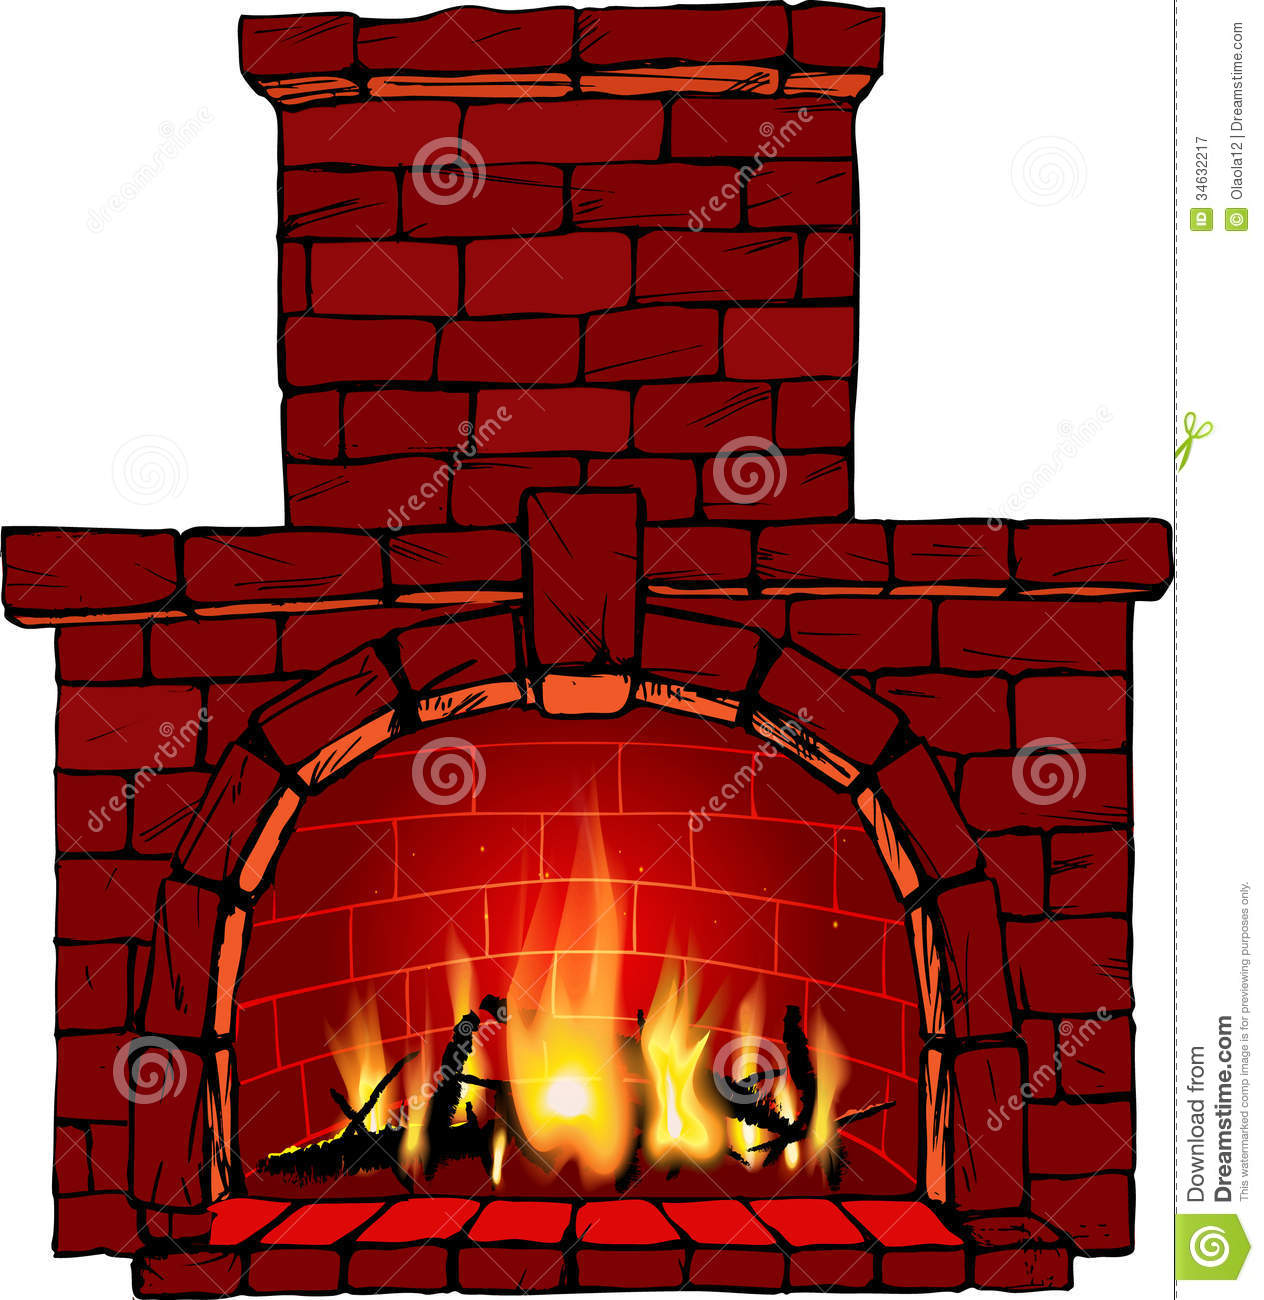 Clipart Fireplace - clipartal